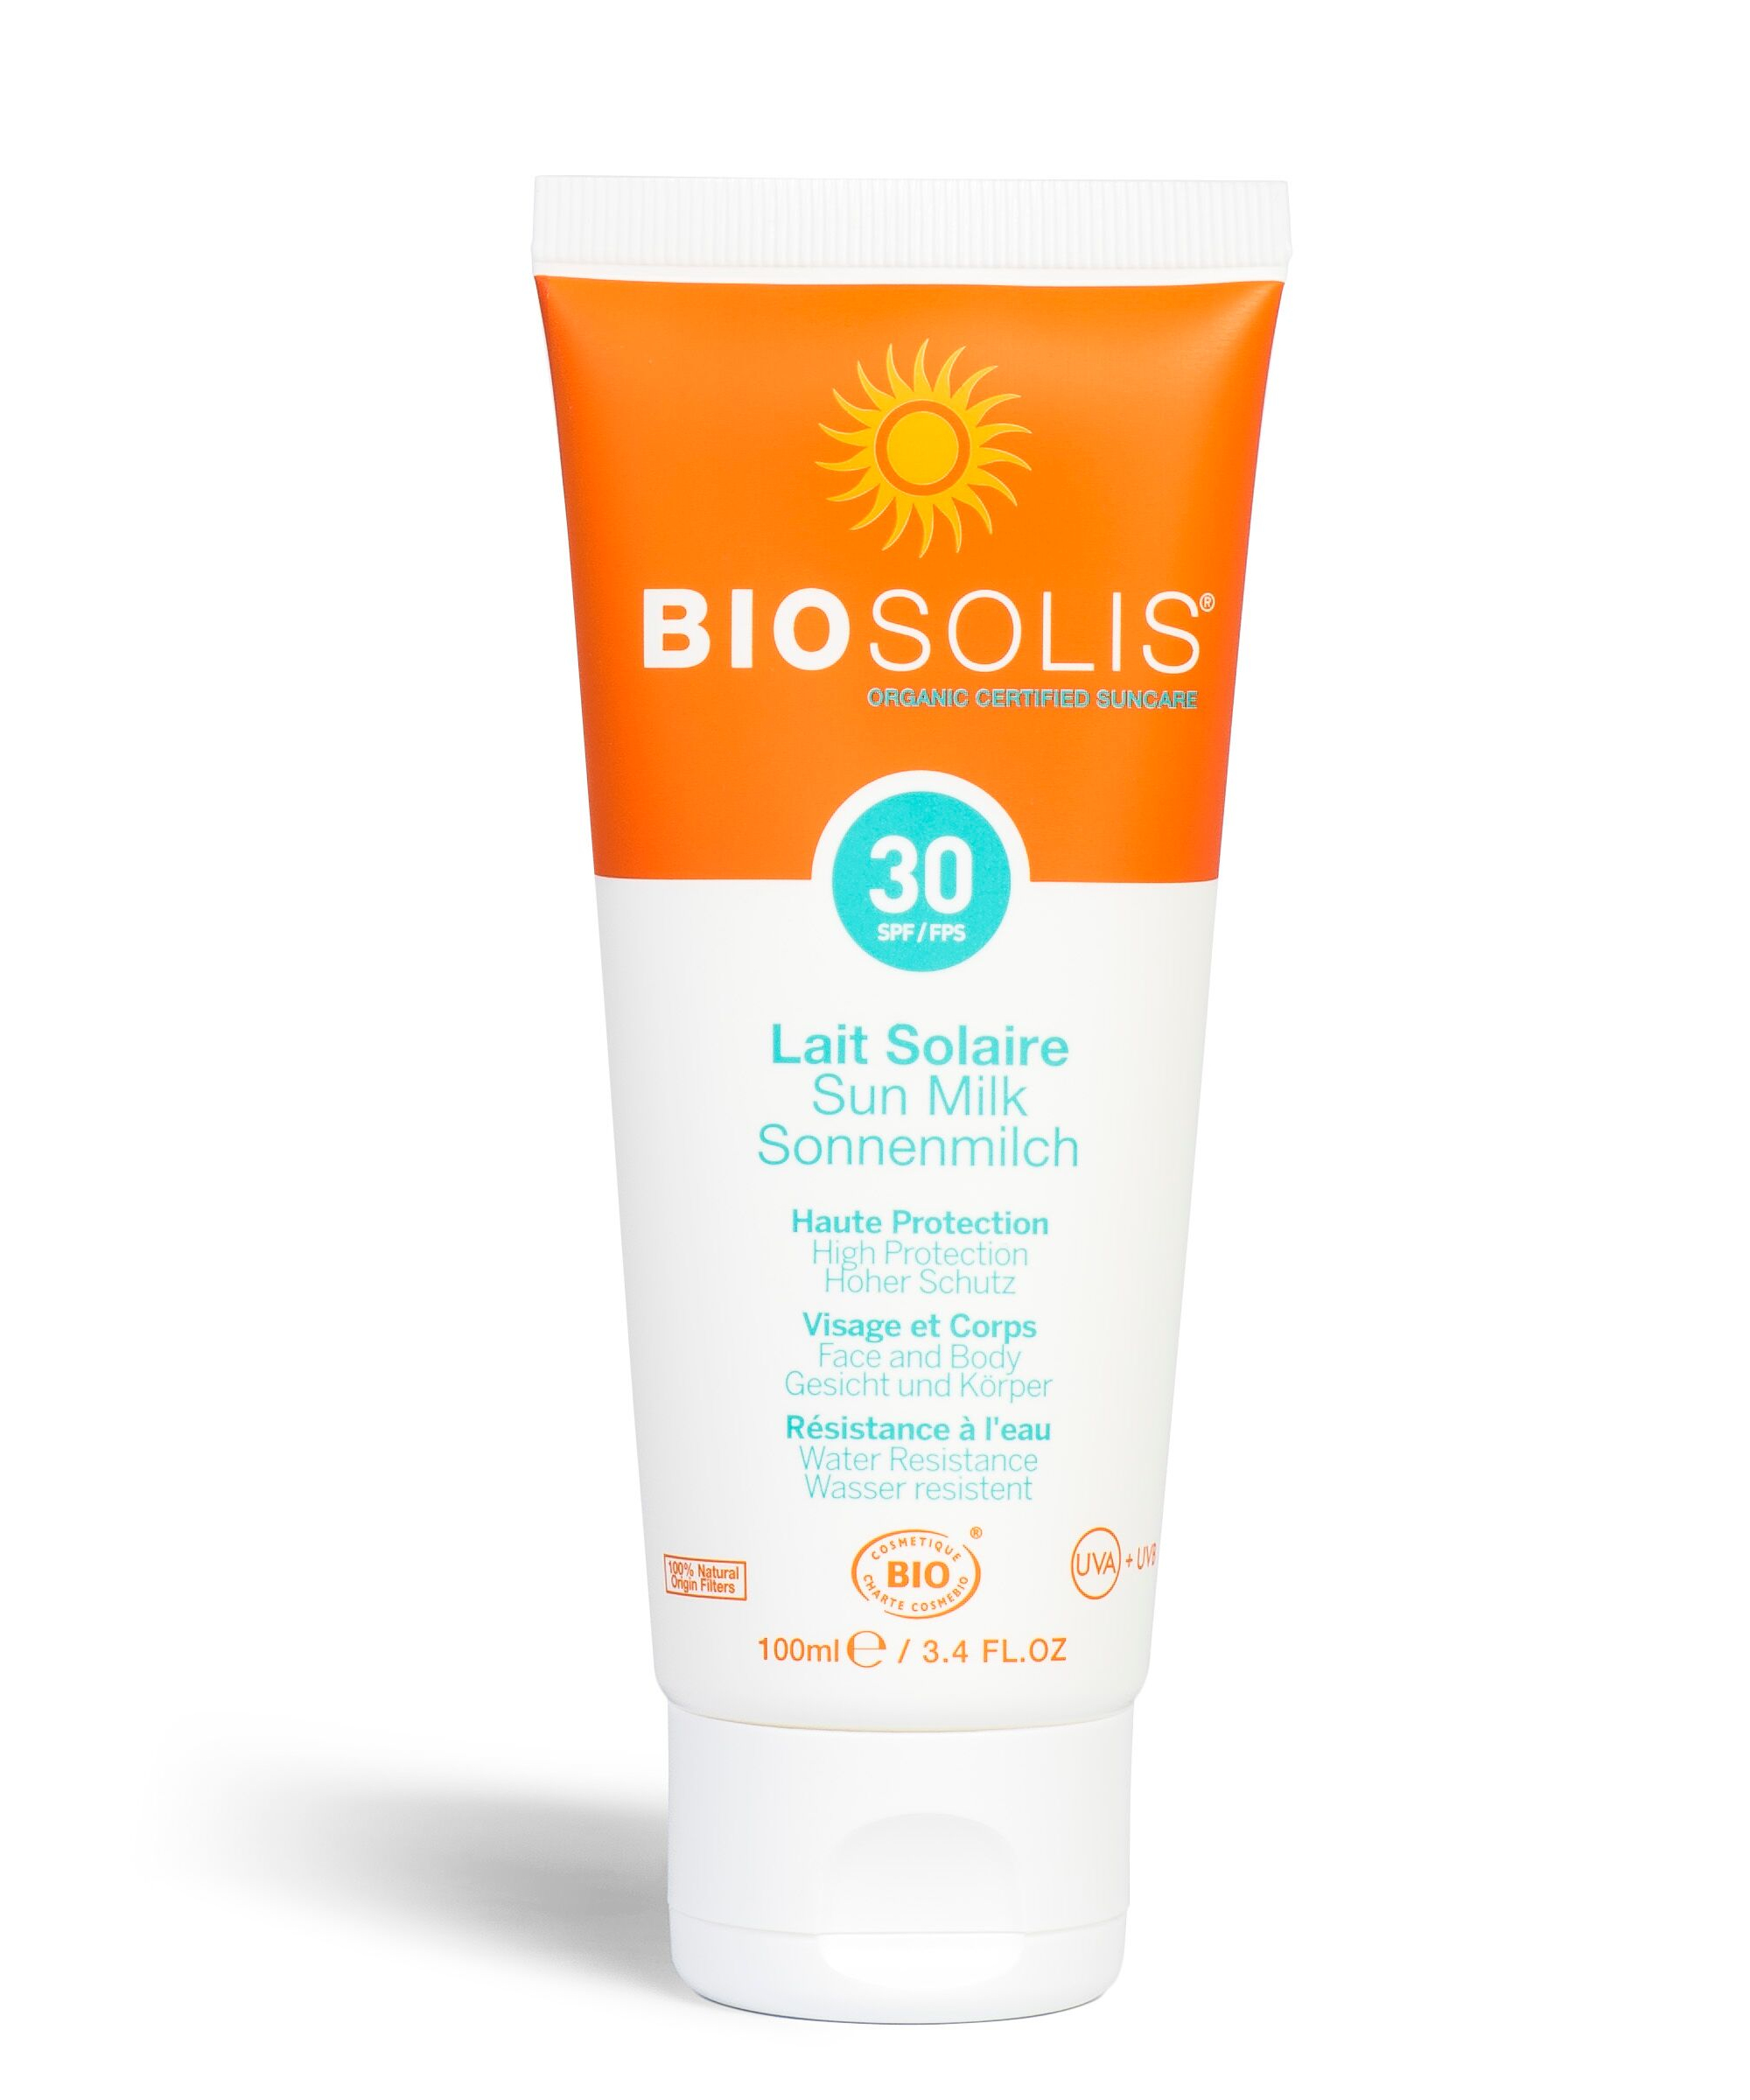 Biosolis BS851